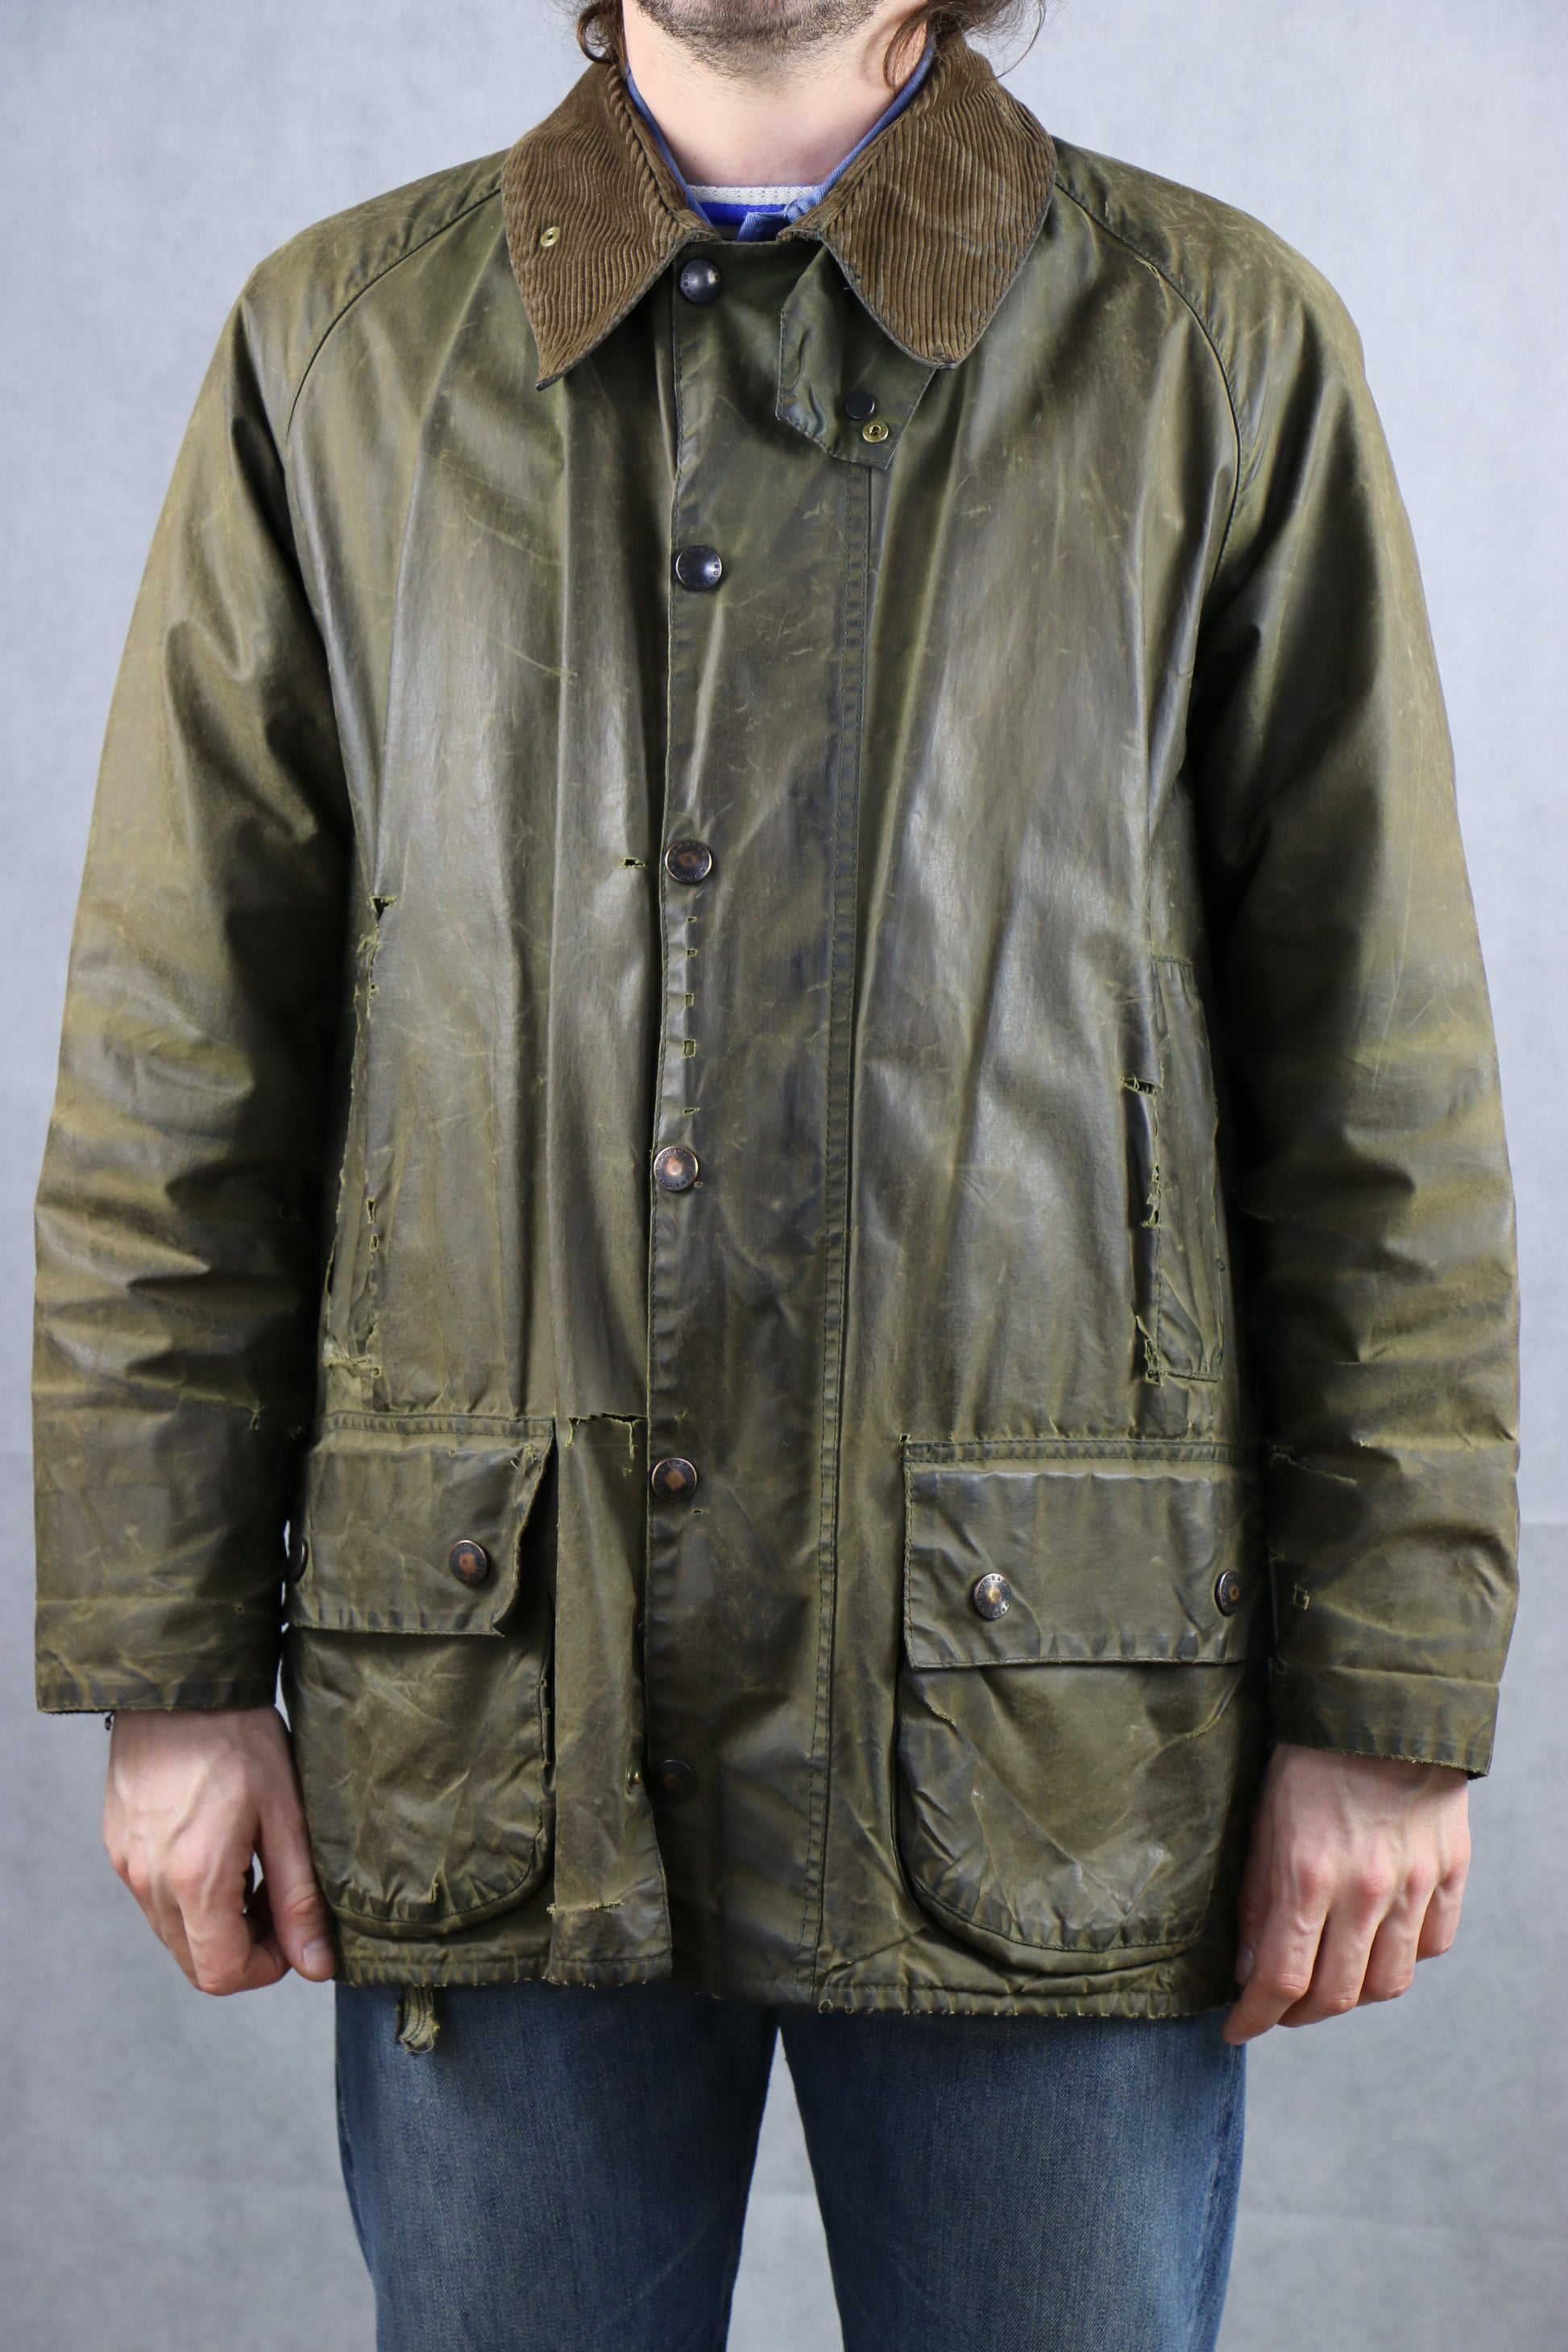 Barbour Beaufort Wax Jacket torn - vintage clothing clochard92.com